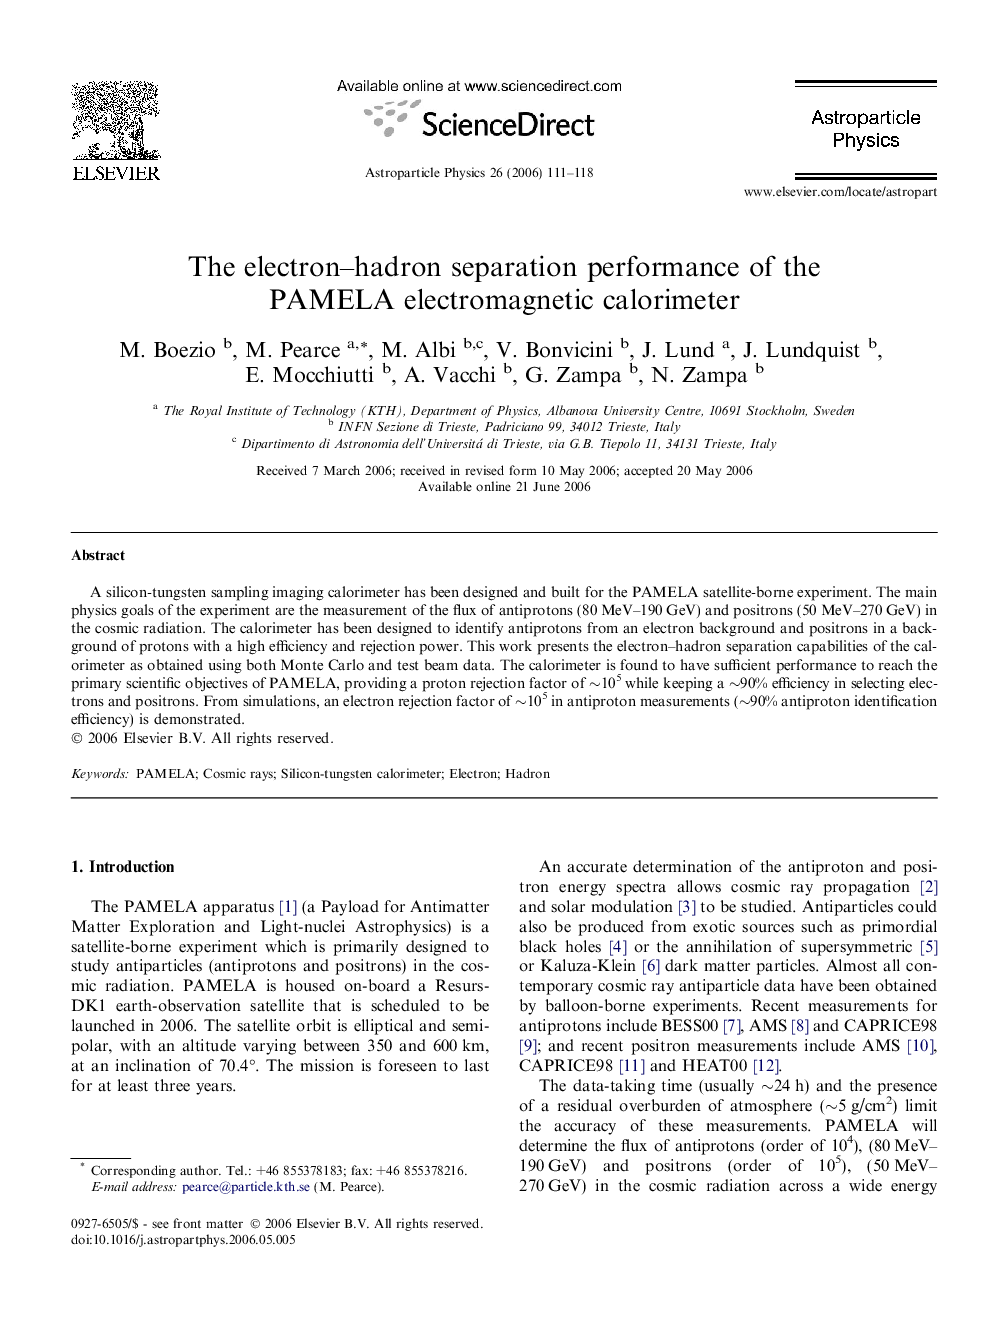 The electron–hadron separation performance of the PAMELA electromagnetic calorimeter